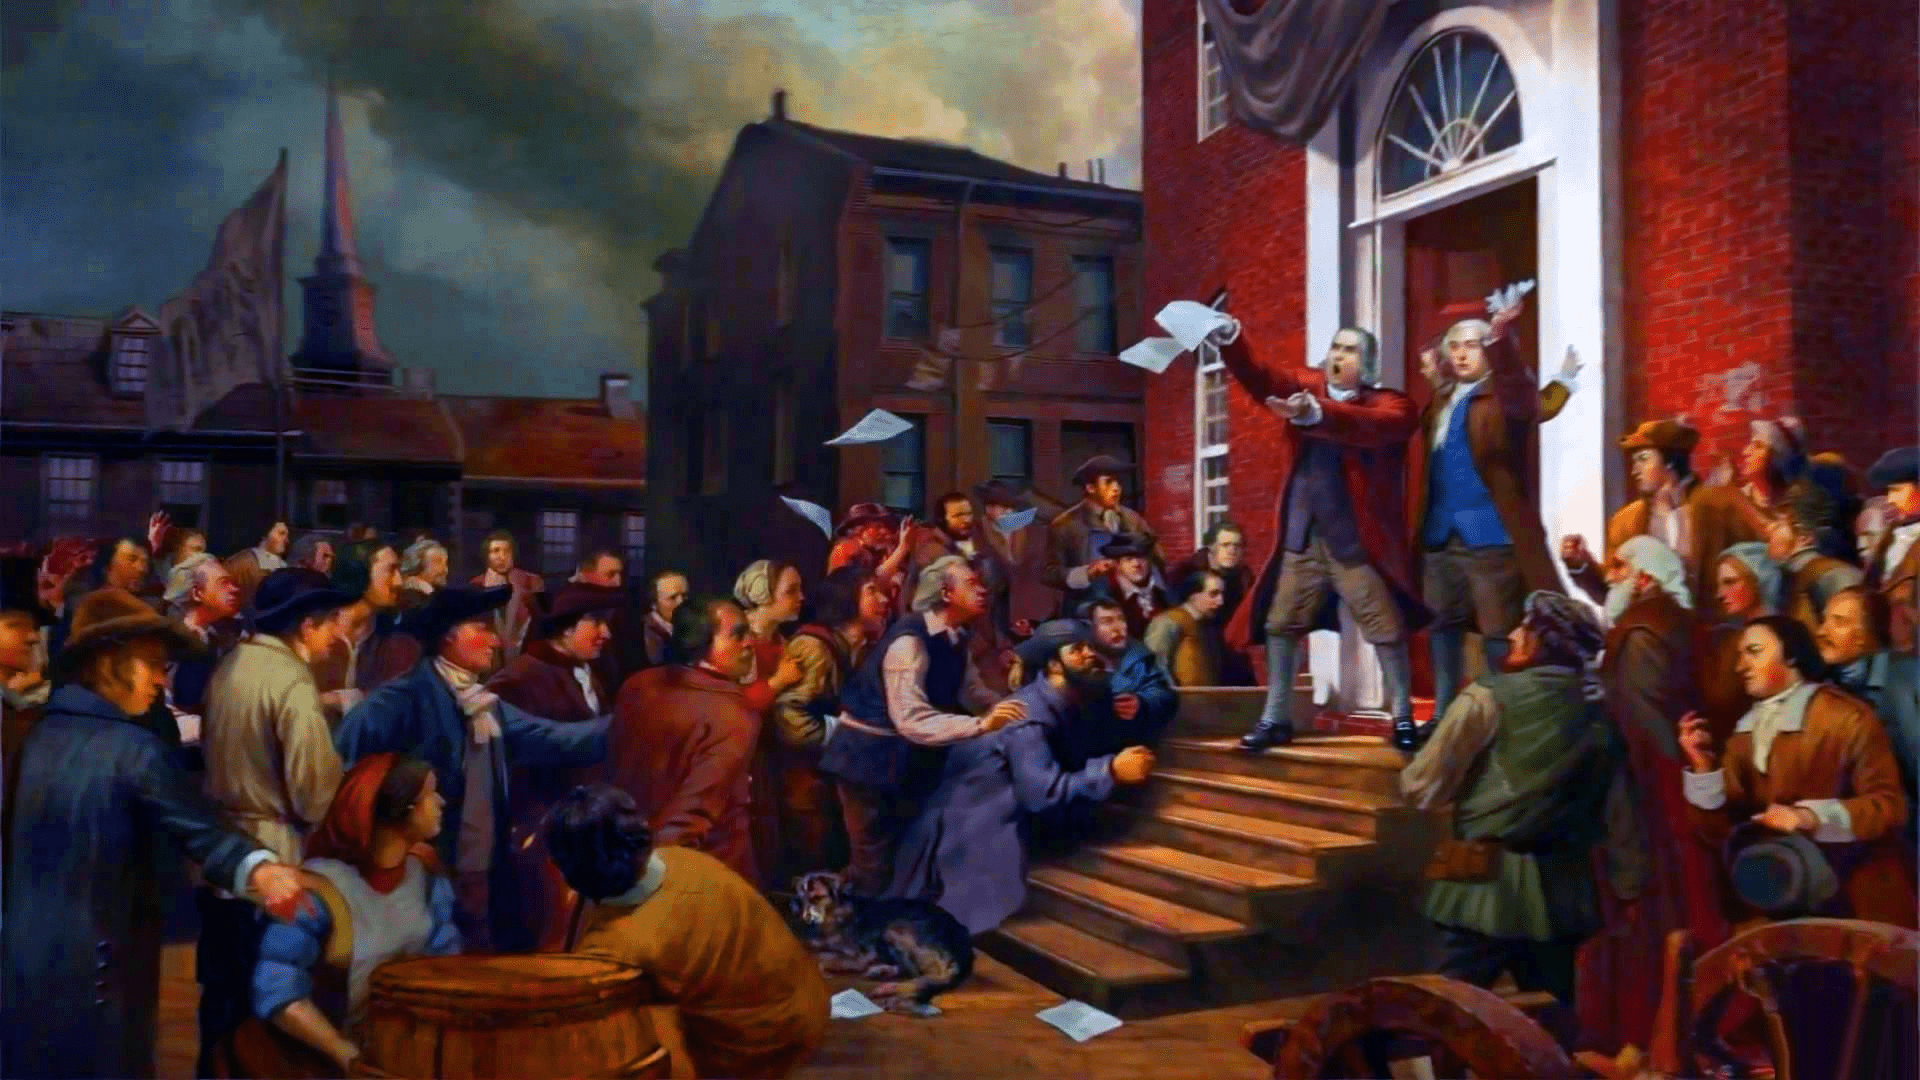 motin-del-te-en-boston-16-de-diciembre-de-1773--asamblea-de-protesta-en-la-old-south-meeting-house.png